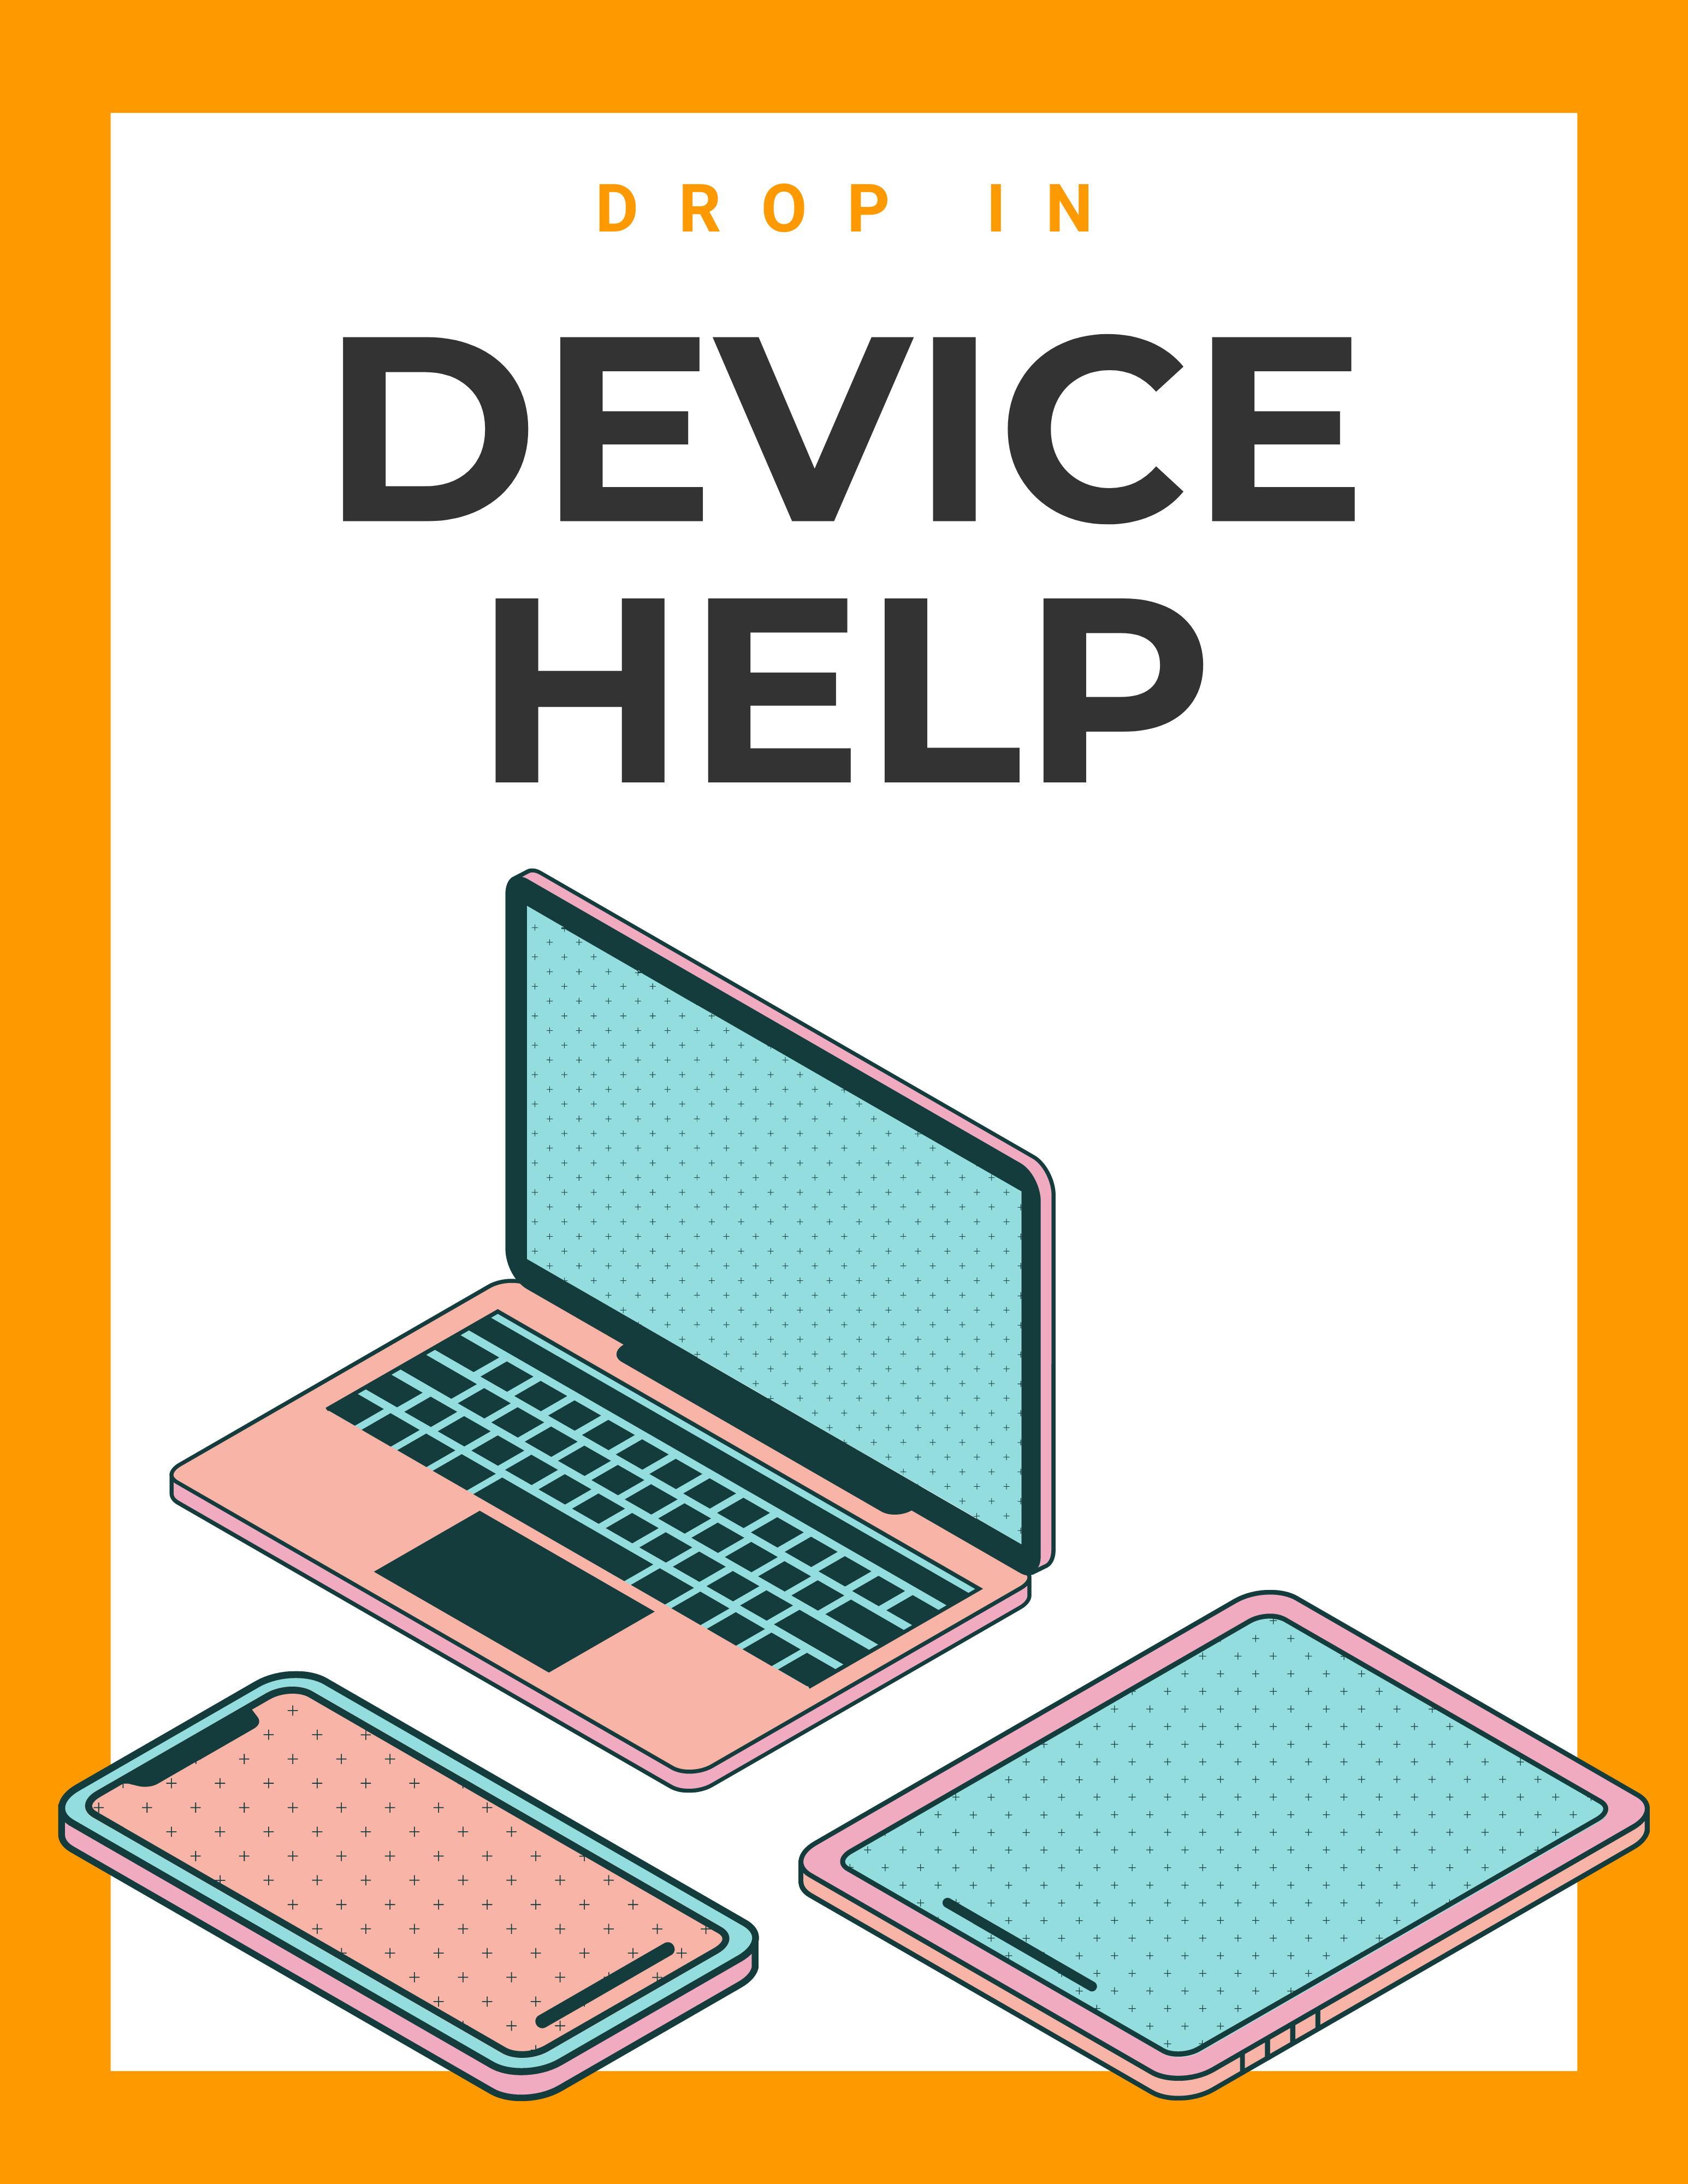 Drop in Device Help Laptop Computer Tablet Smart Phone